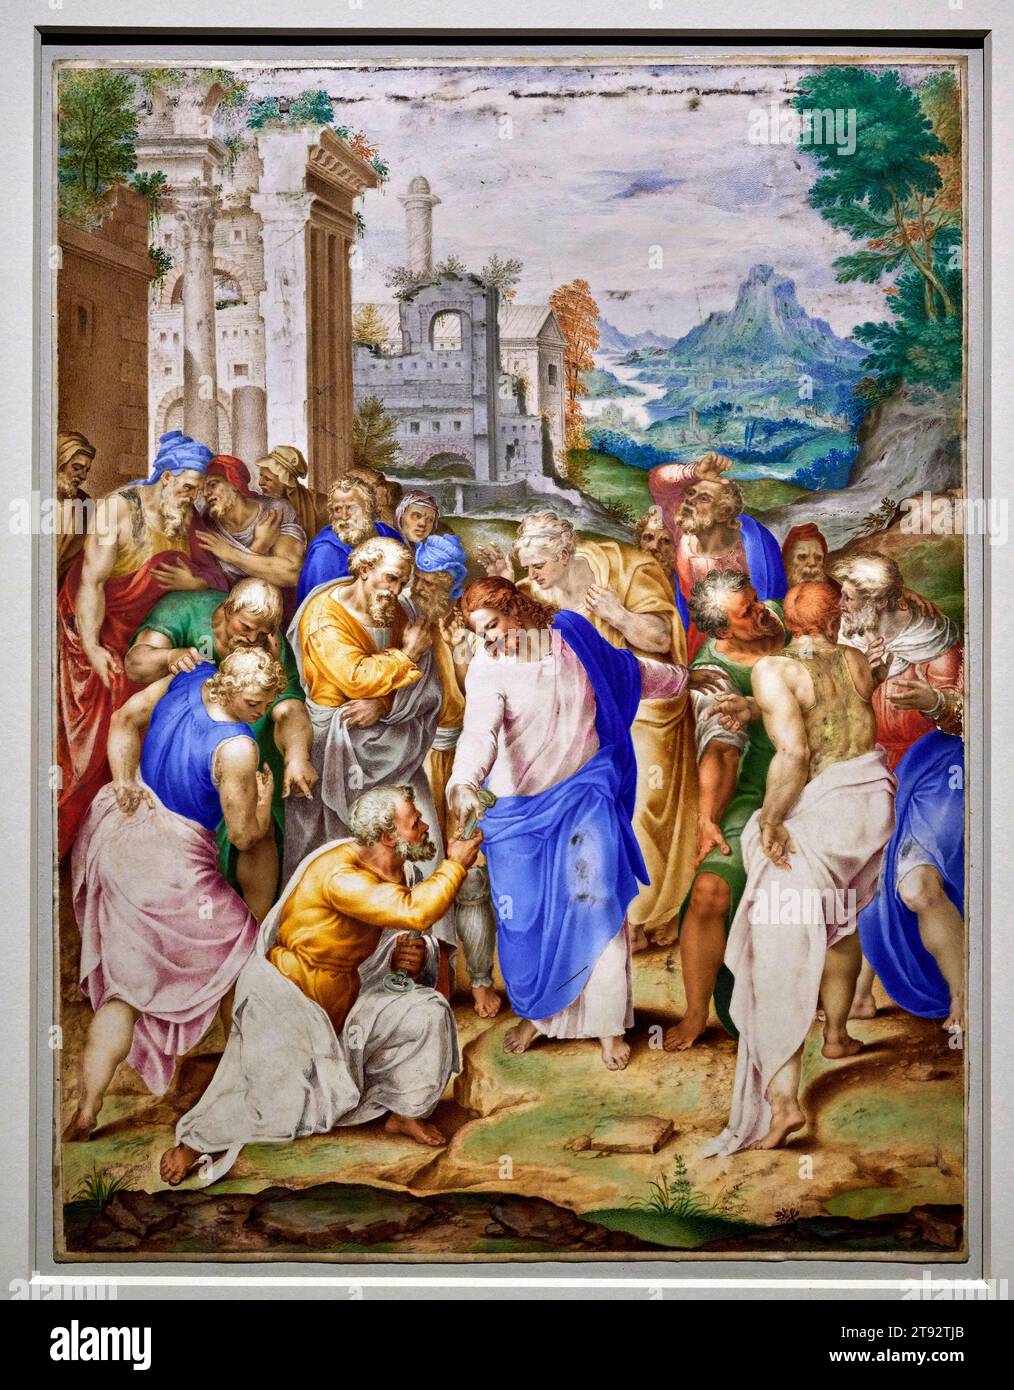 Cristo consegna le chiavi a S. Pietro - miniatura su pergamena - Giambattista Castello - 159 8 - Parigi, Musée du Louvre Banque D'Images